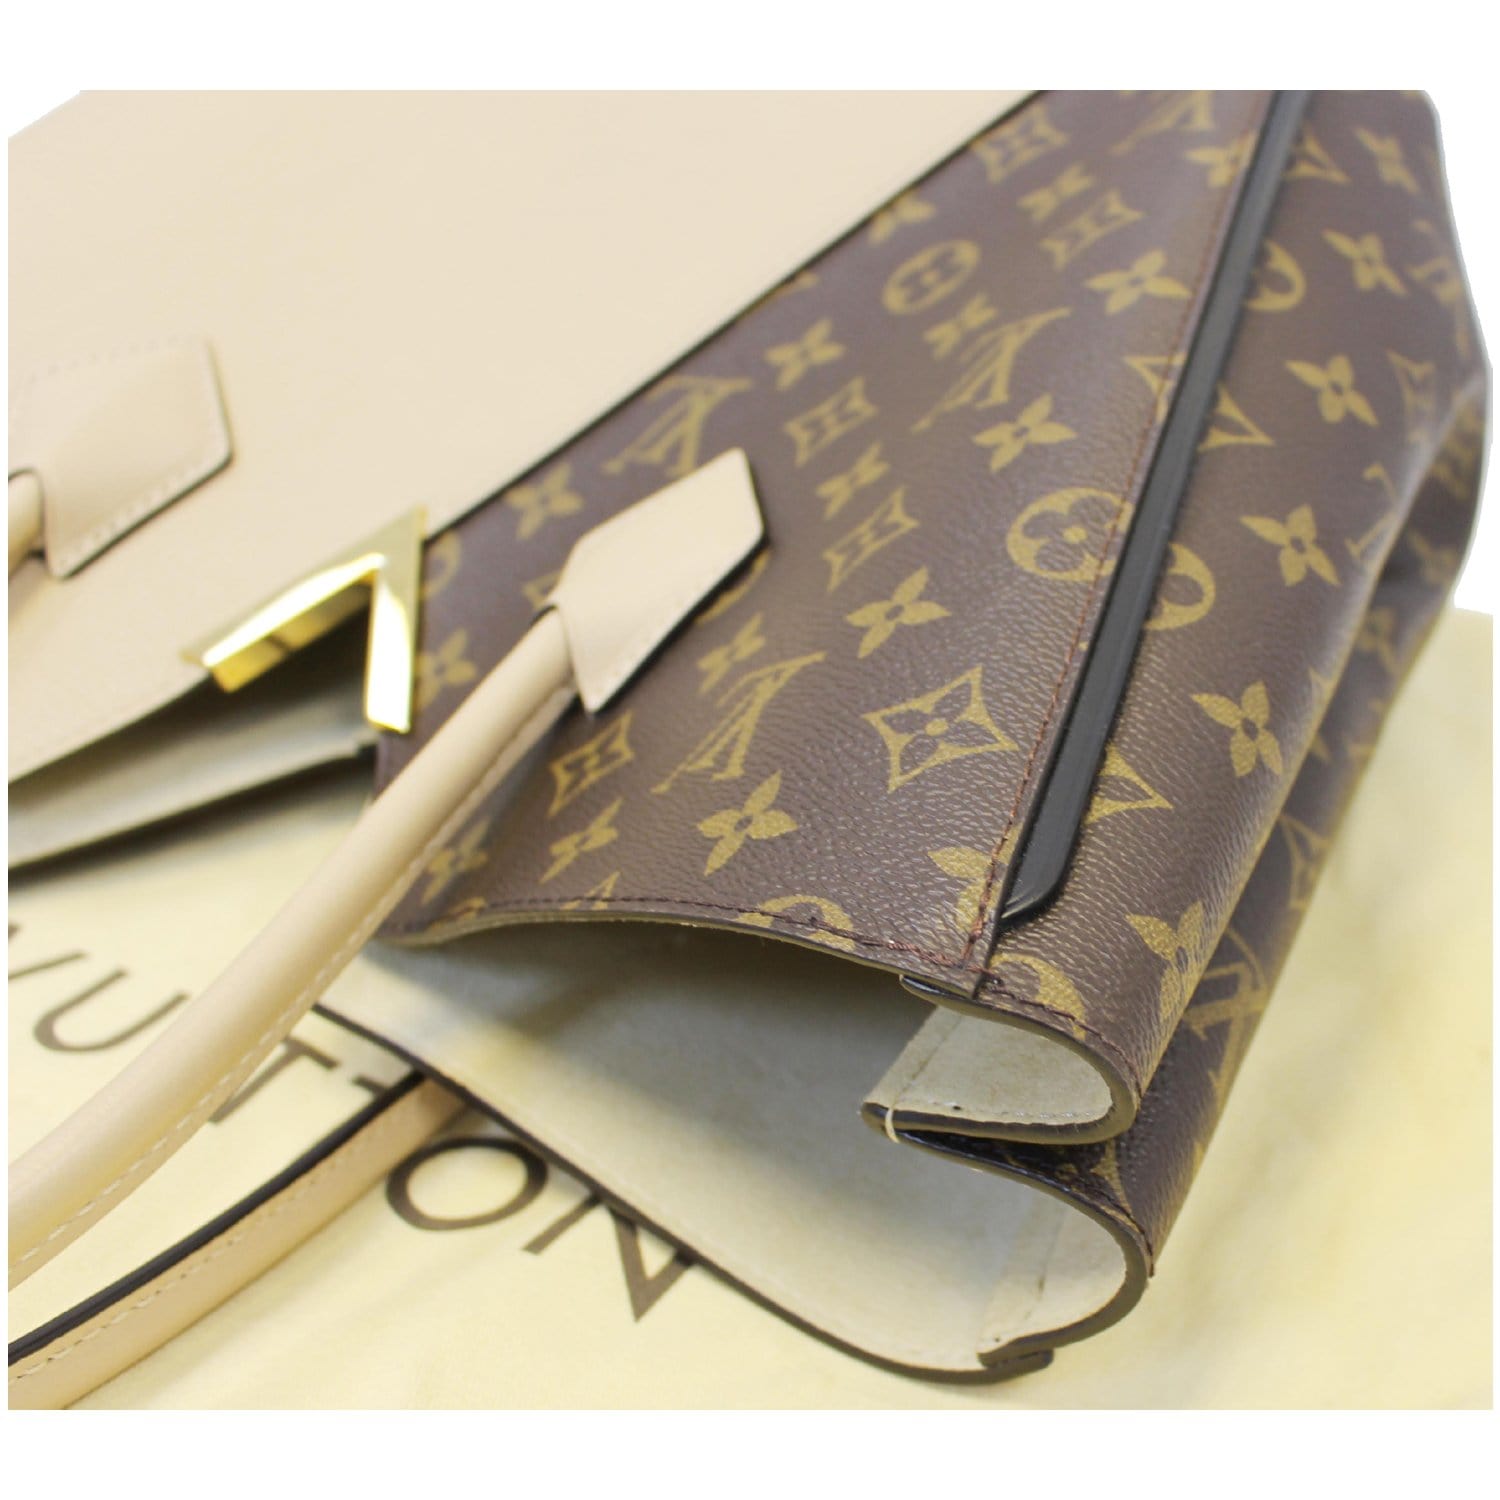 Louis Vuitton, Bags, Louis Vuitton Kimono Wallet